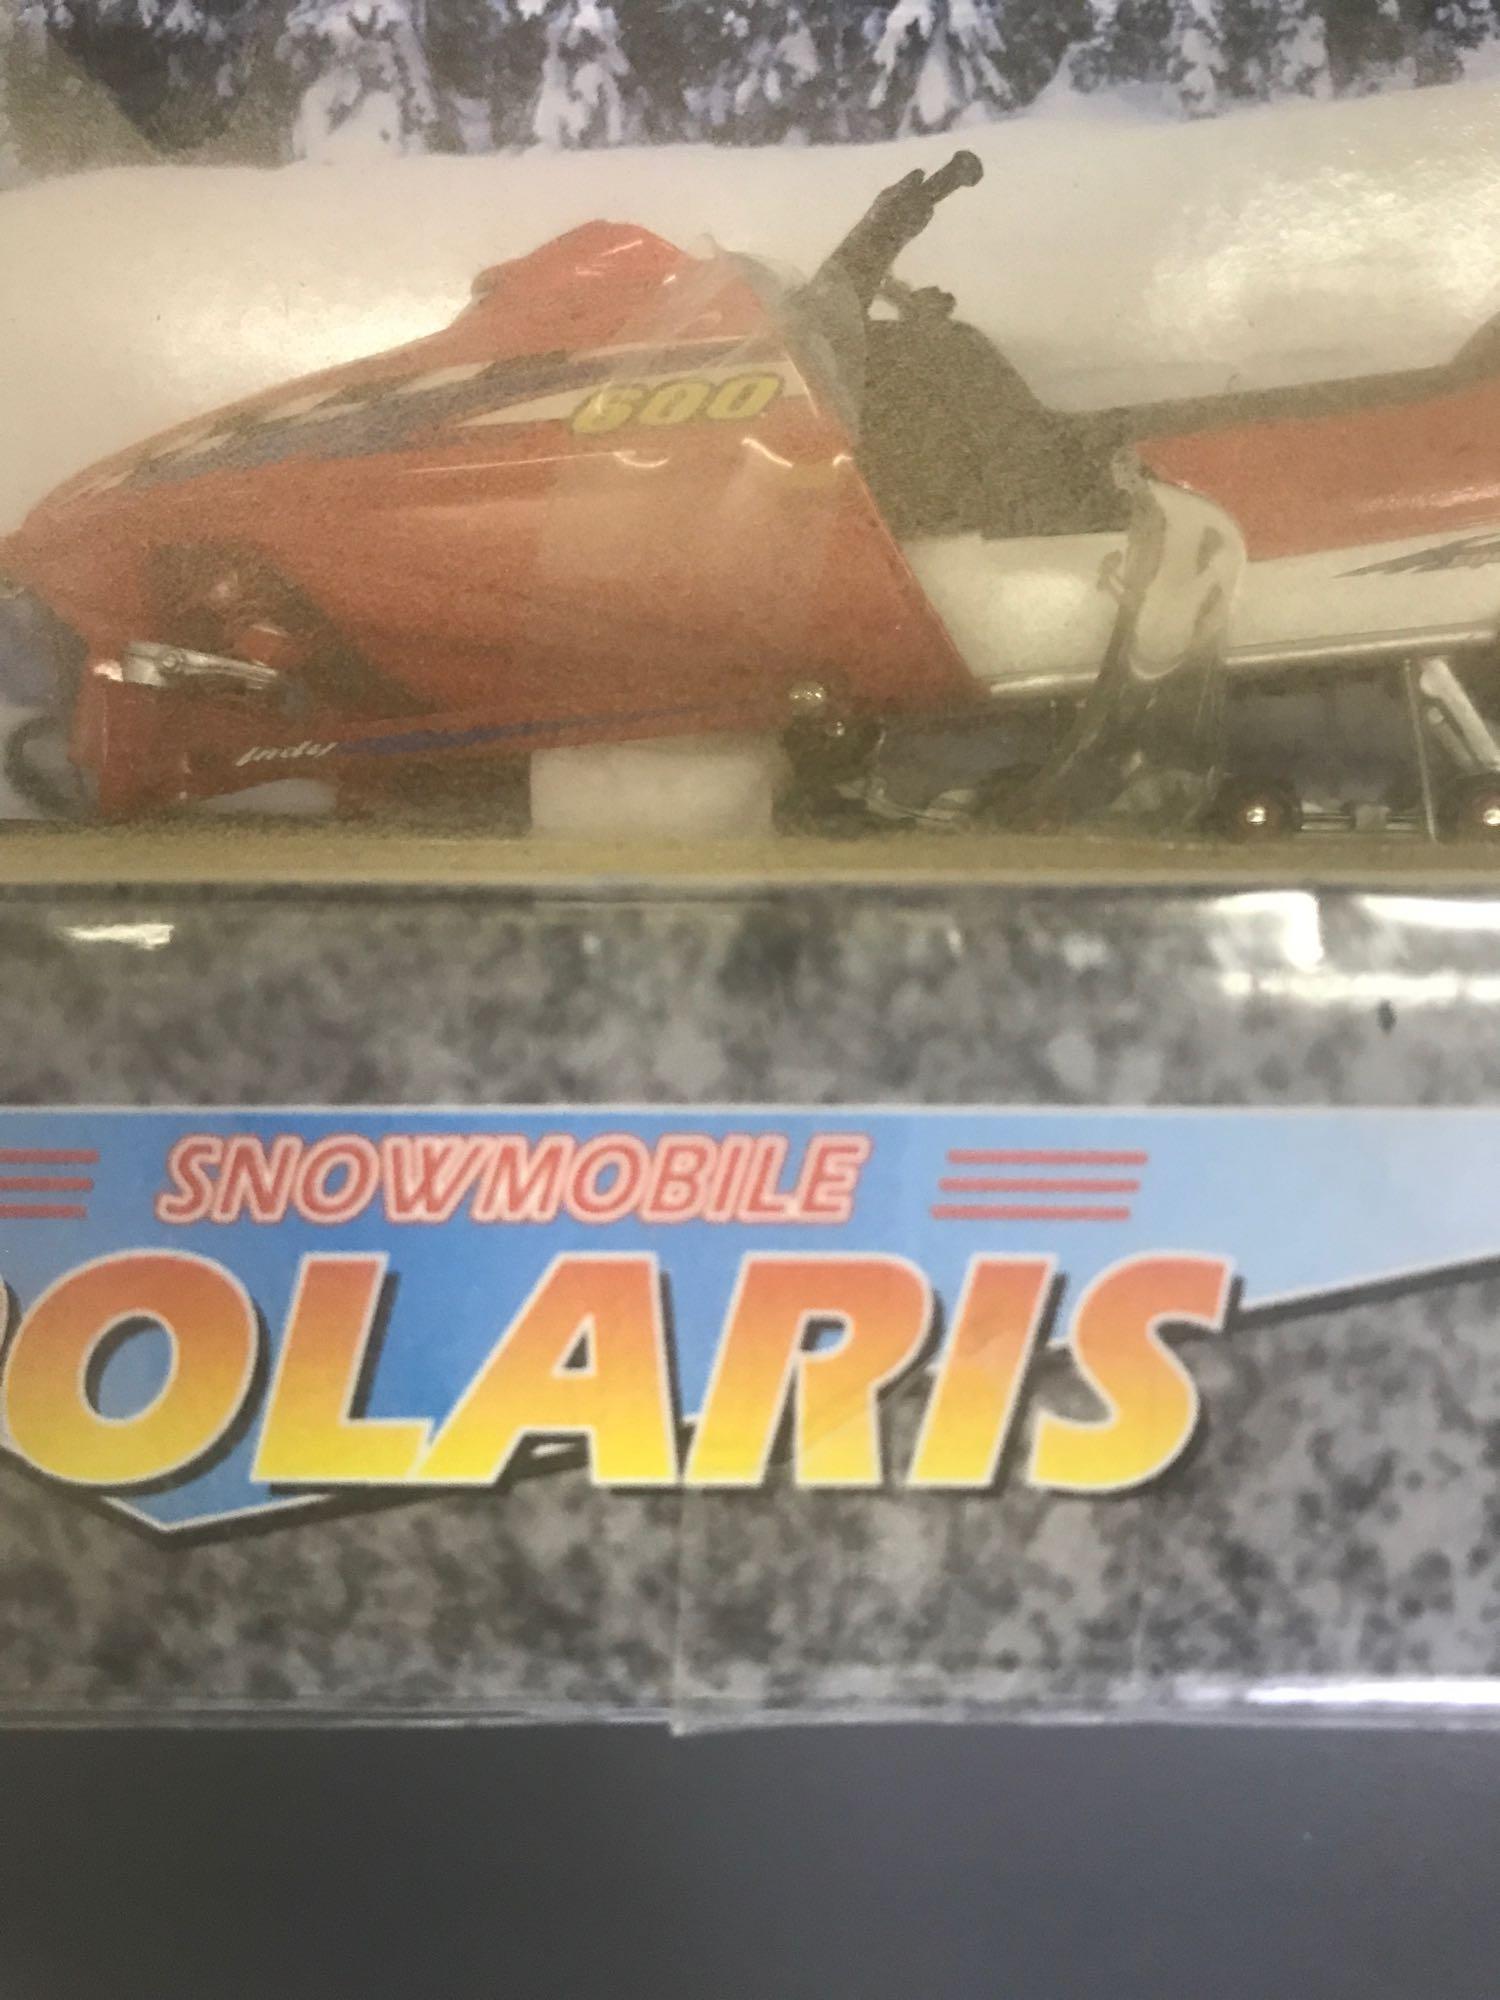 1/18 Scale Polaris Snowmobiles and Watercraft-NIB